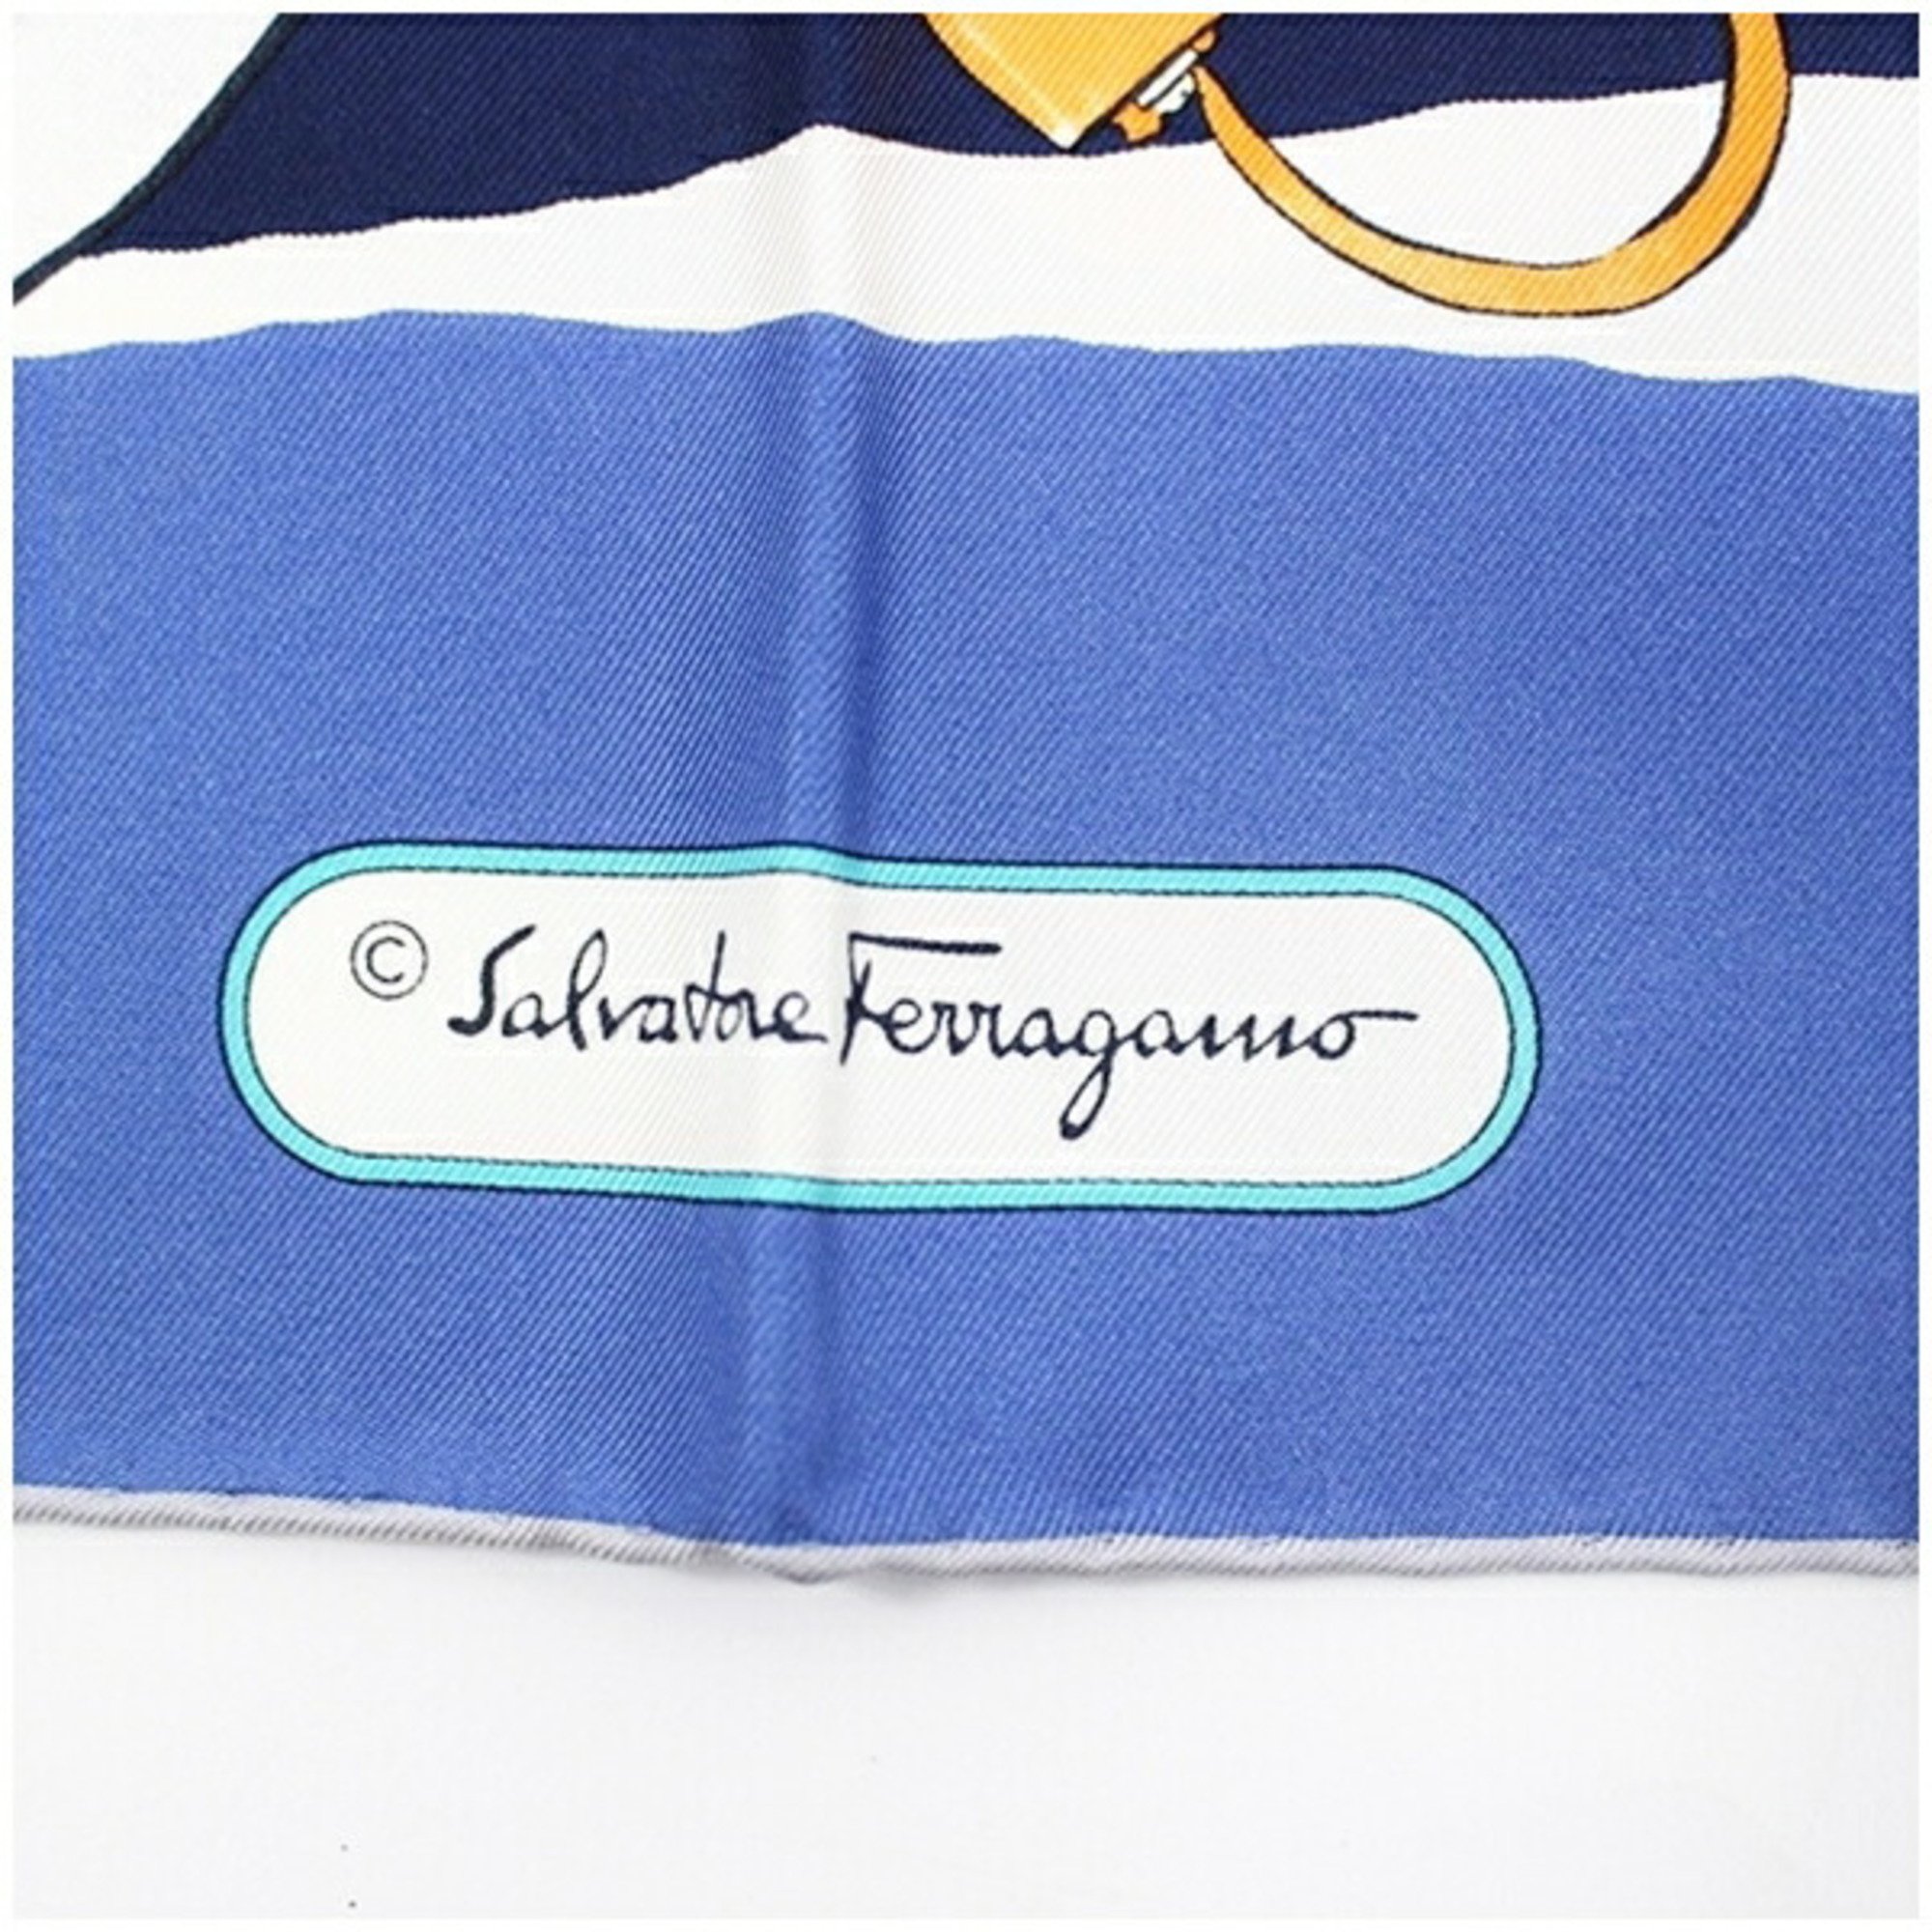 Salvatore Ferragamo Scarf Muffler Bag Pattern Light Blue Women's